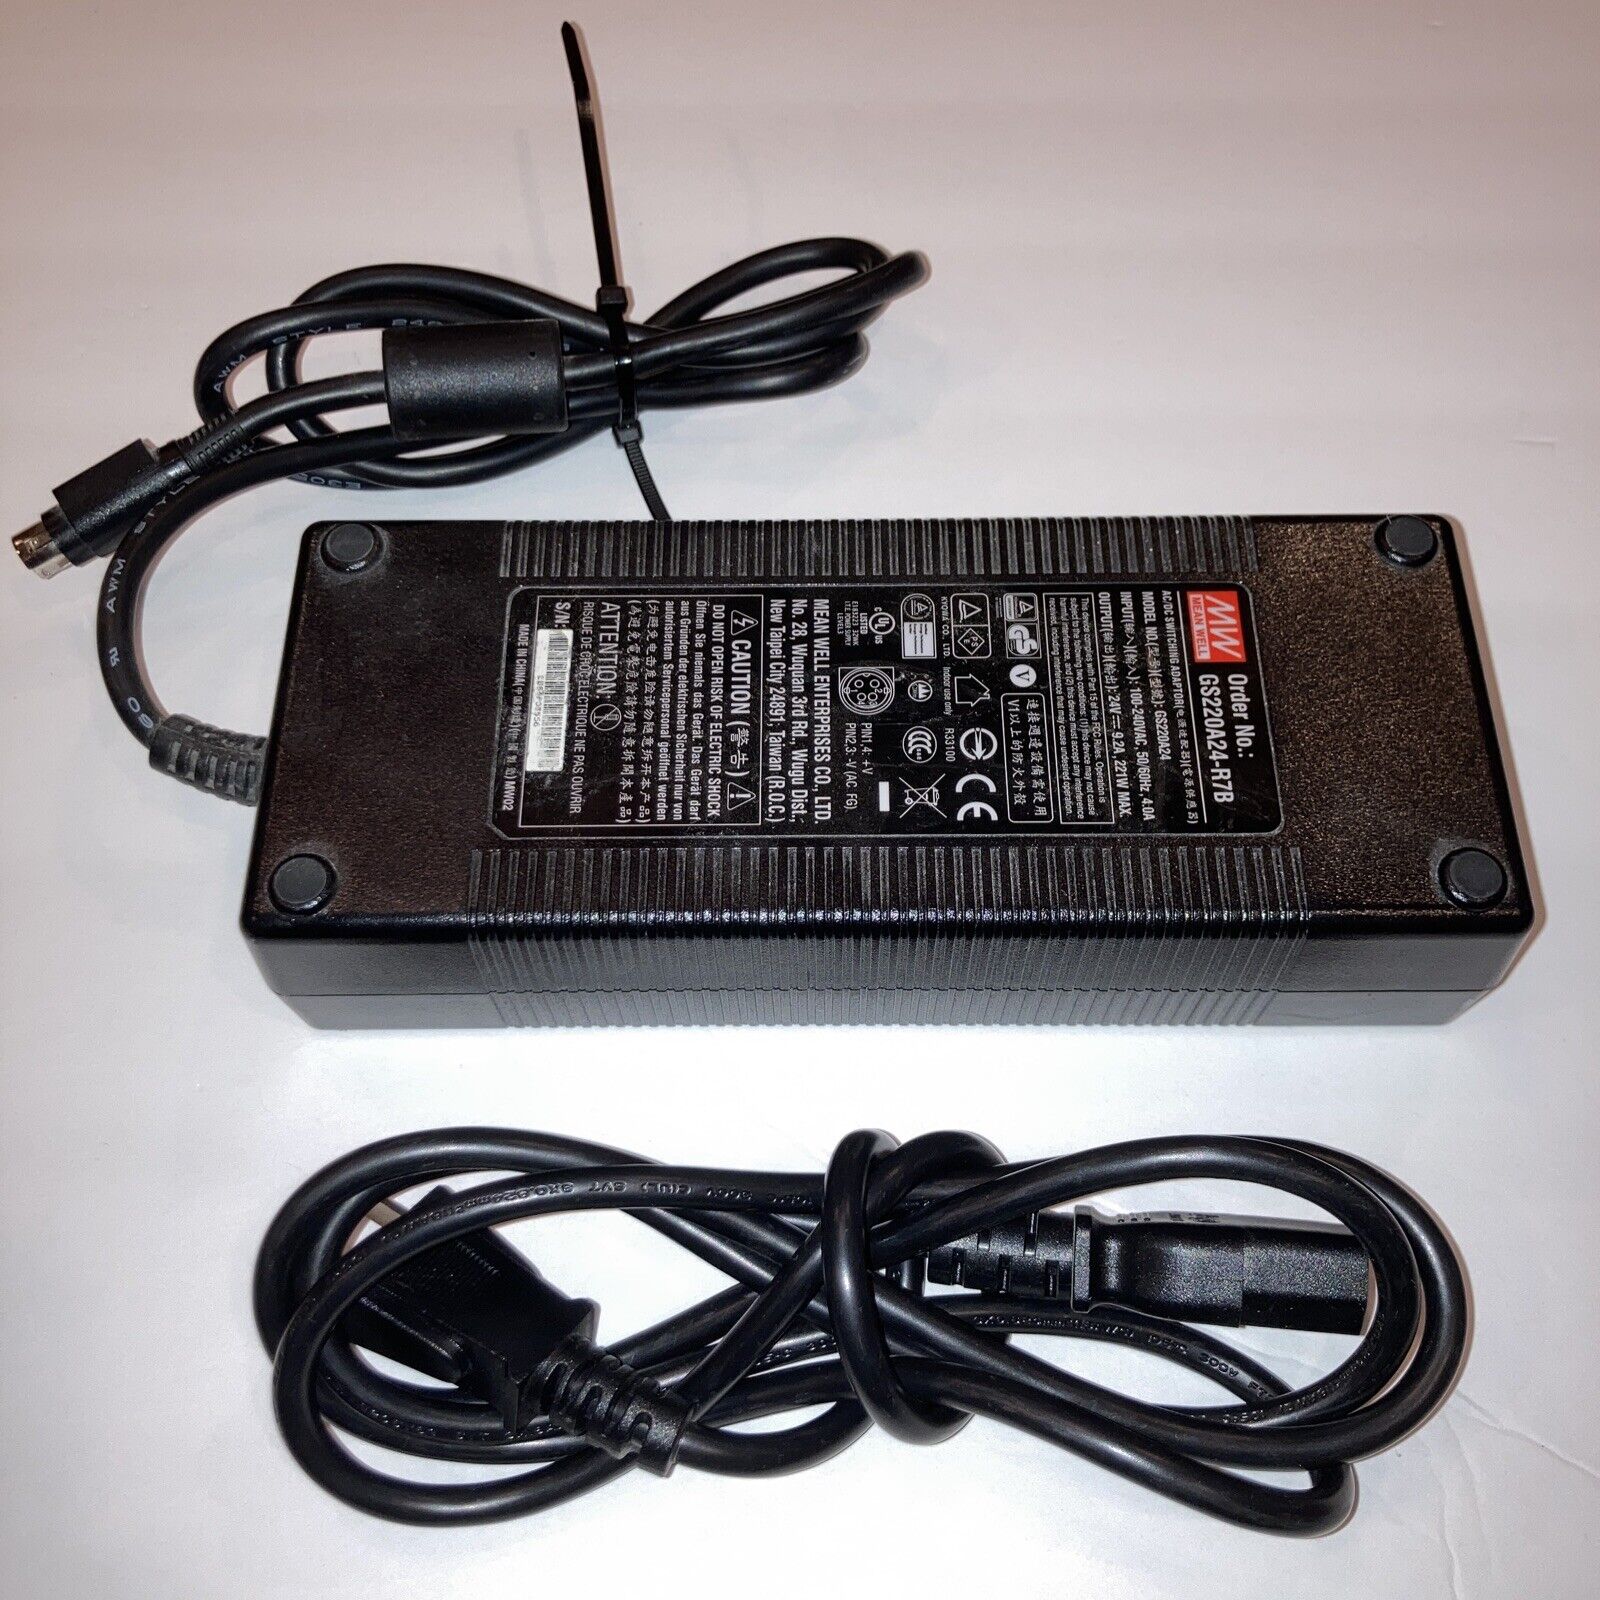 OEM EdacPower AC/DC Adapter for Yamaha PSR-F51 PSR-F50 PSR-223 Keyboard w/Cord Compatible Brand For Yamaha, Universal